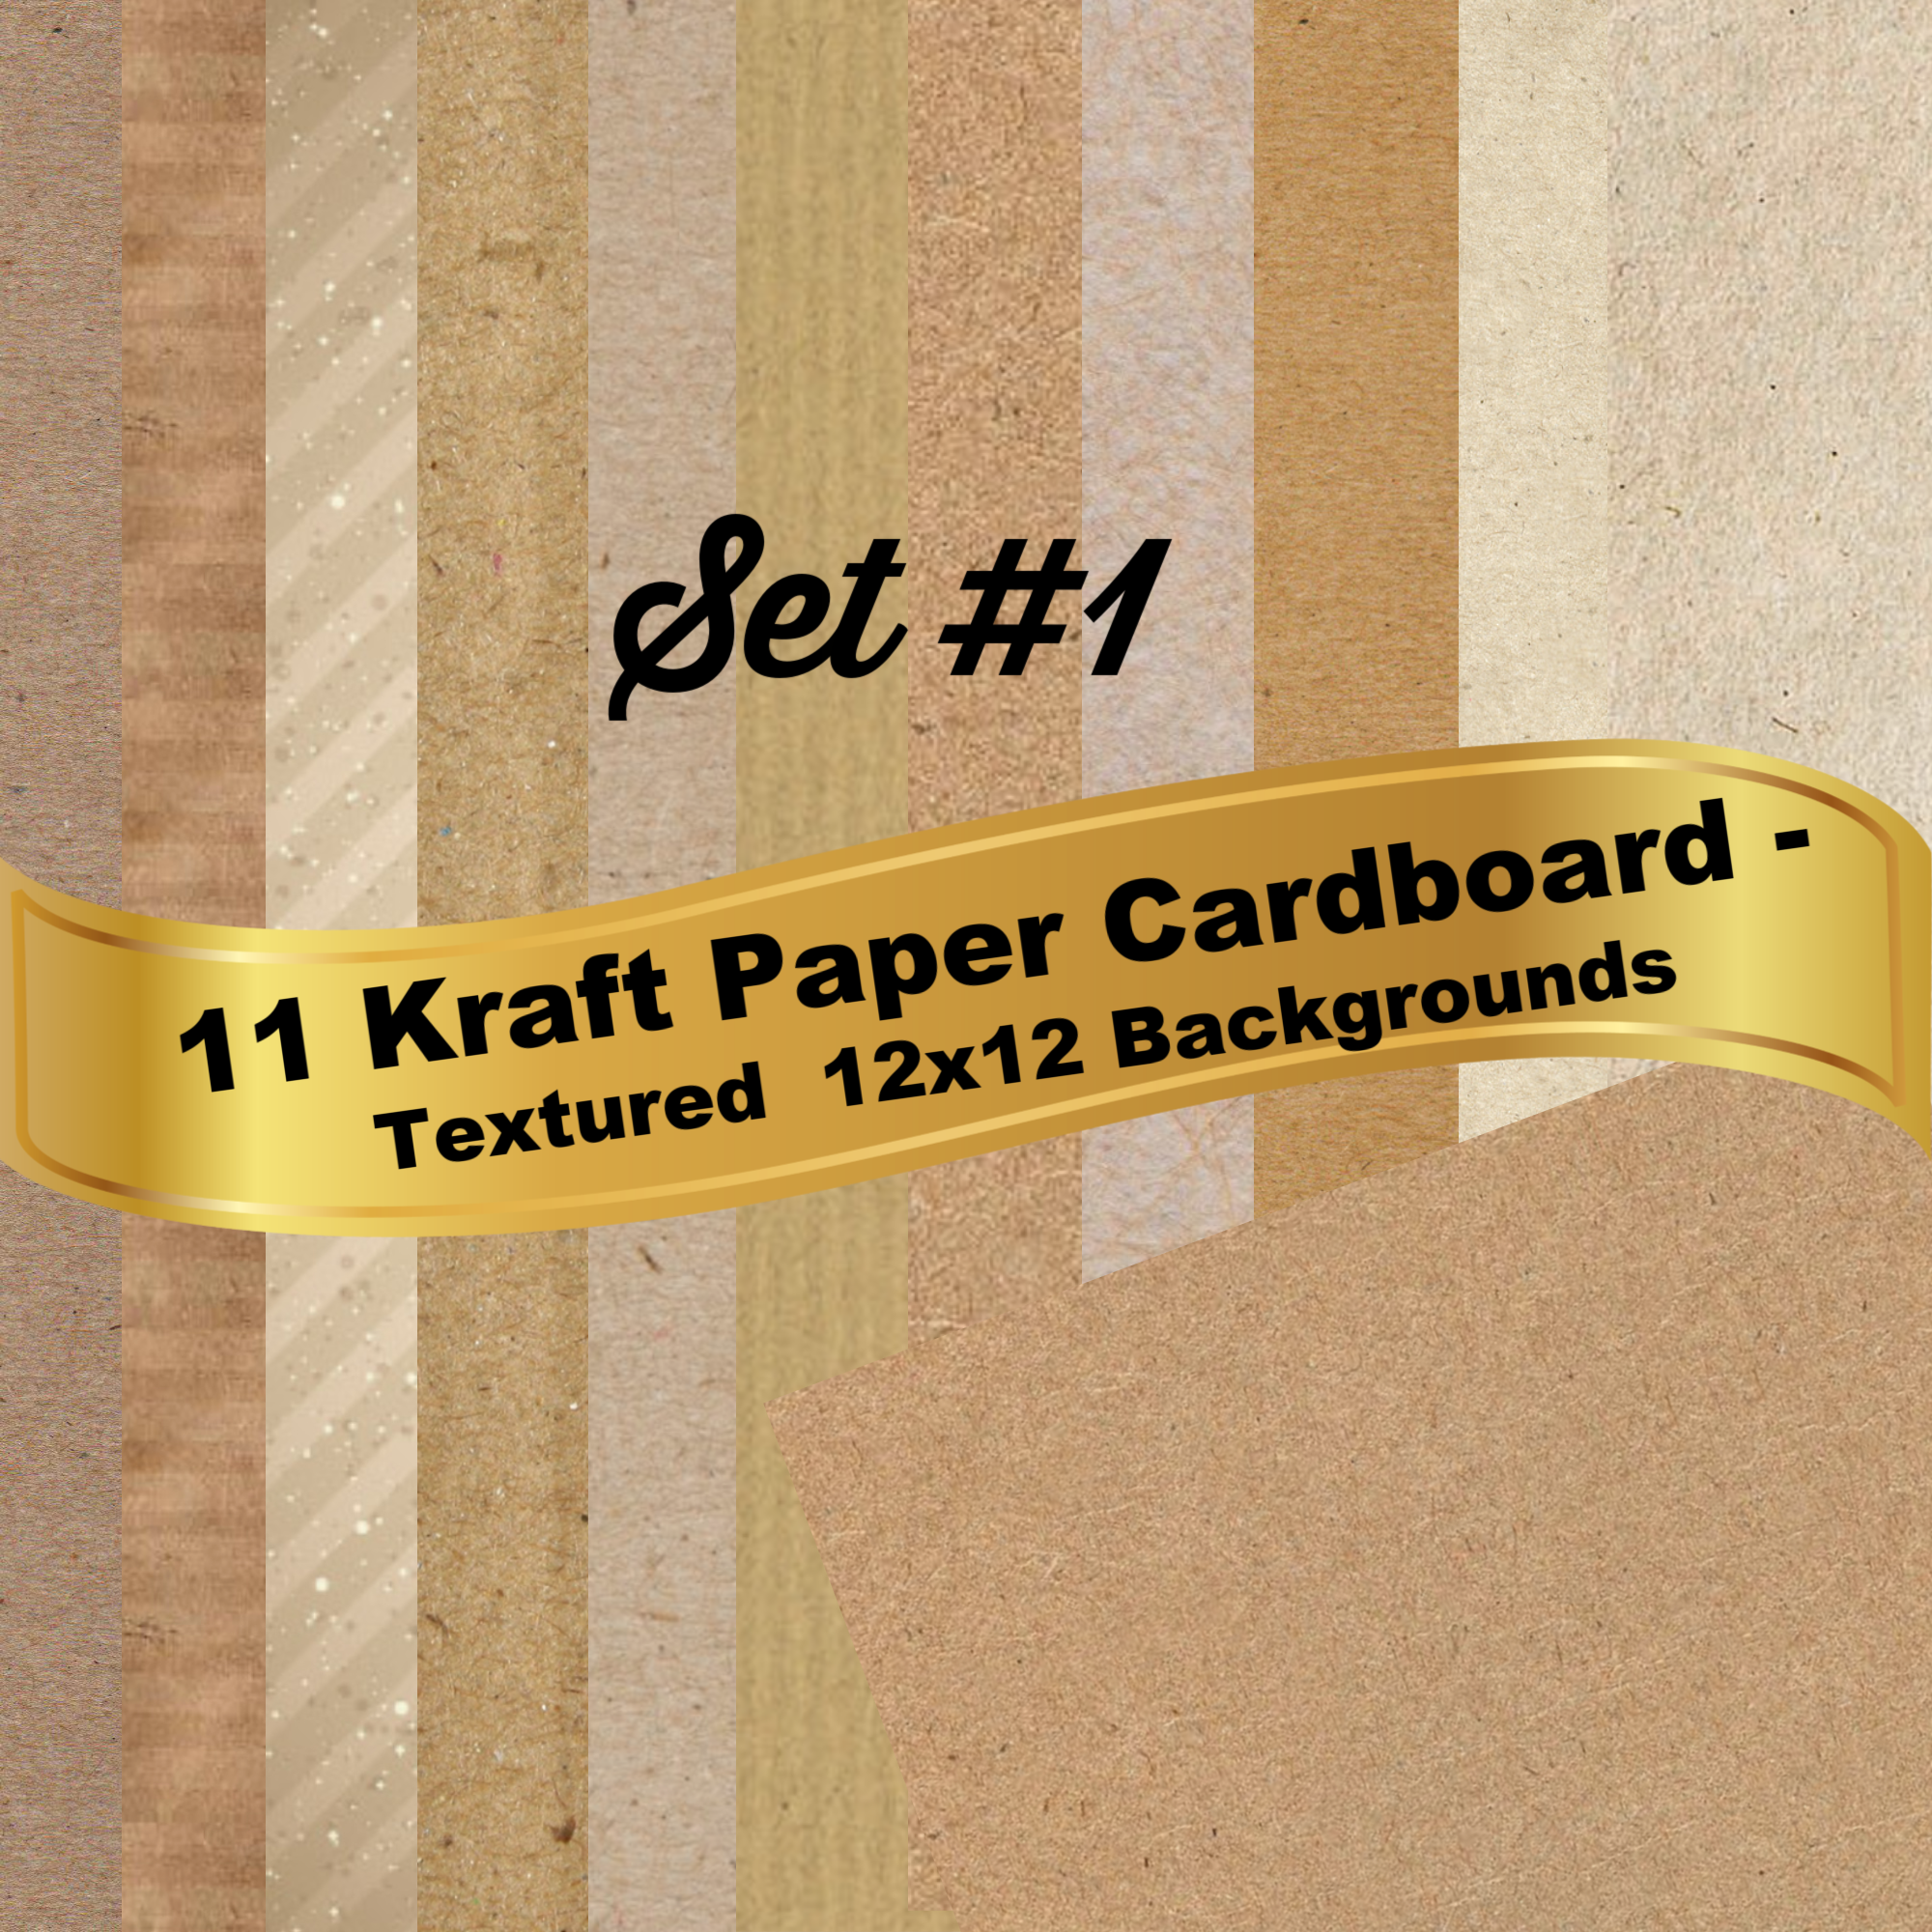 11 Kraft Cardboard Paper Texture 12x12 Backgrounds - Paper - Pages Bun